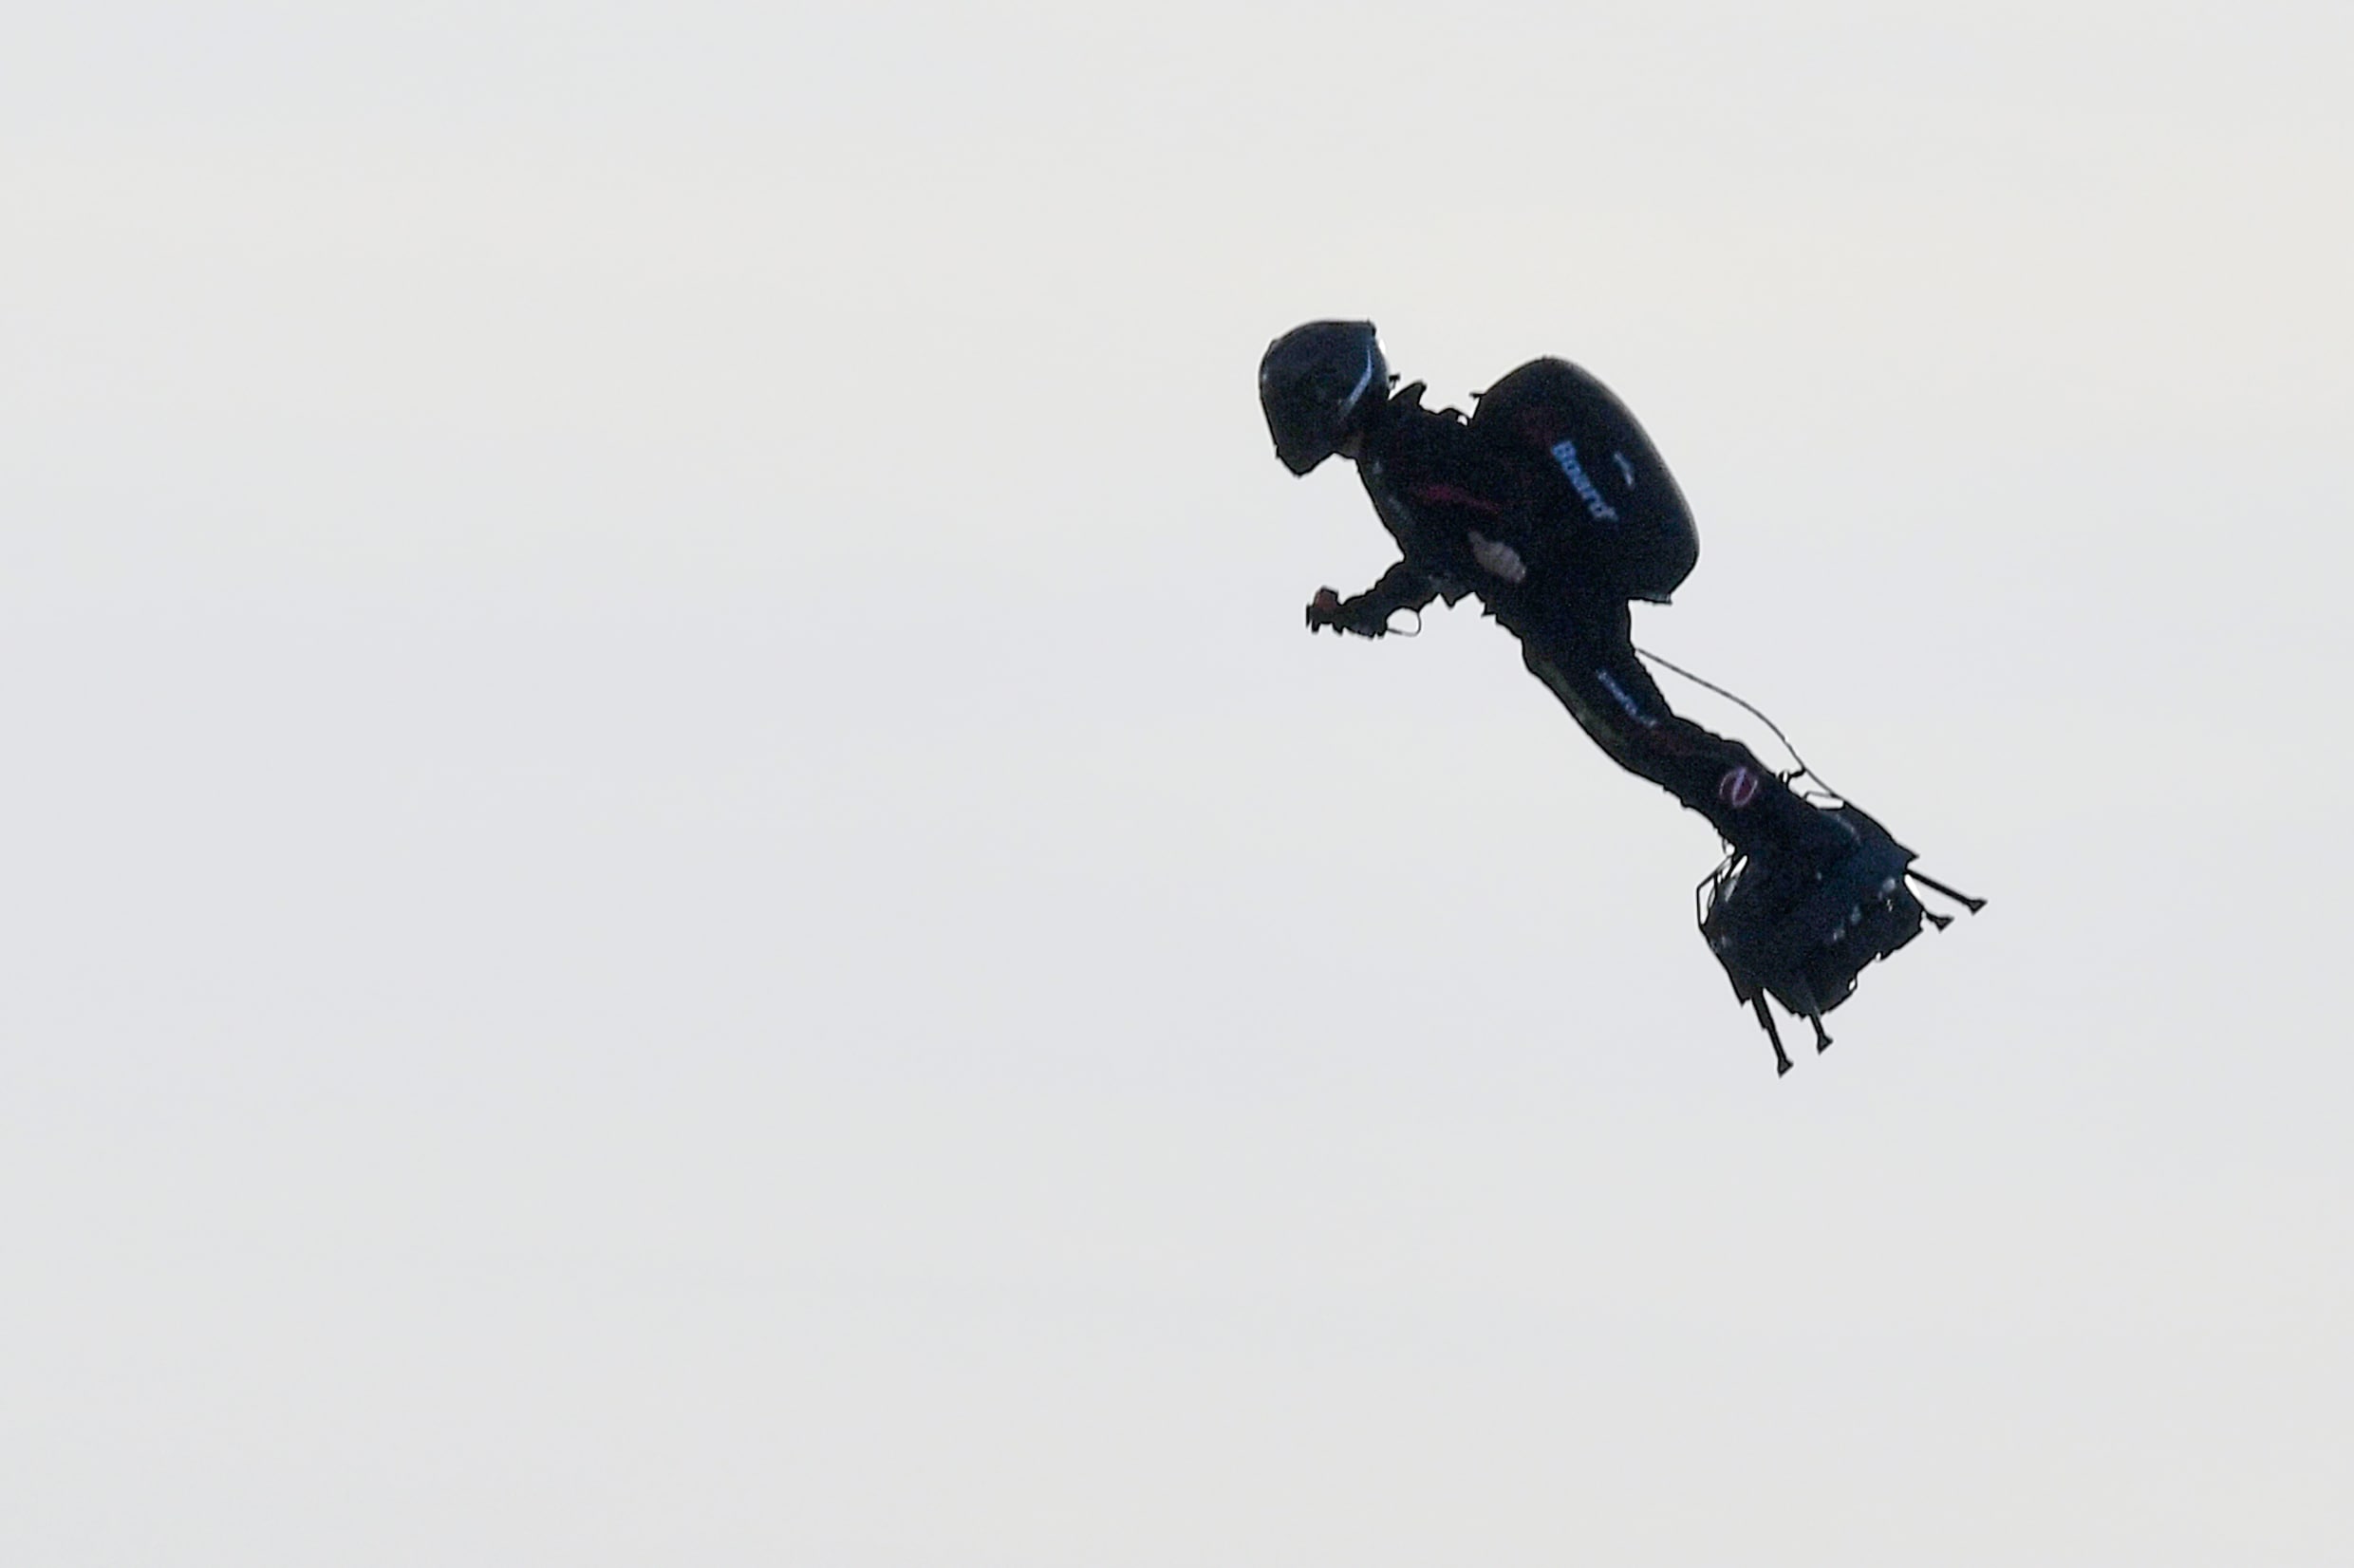 Fenomenale beelden: Fransman op flyboard slaagt erin om Kanaal over te steken